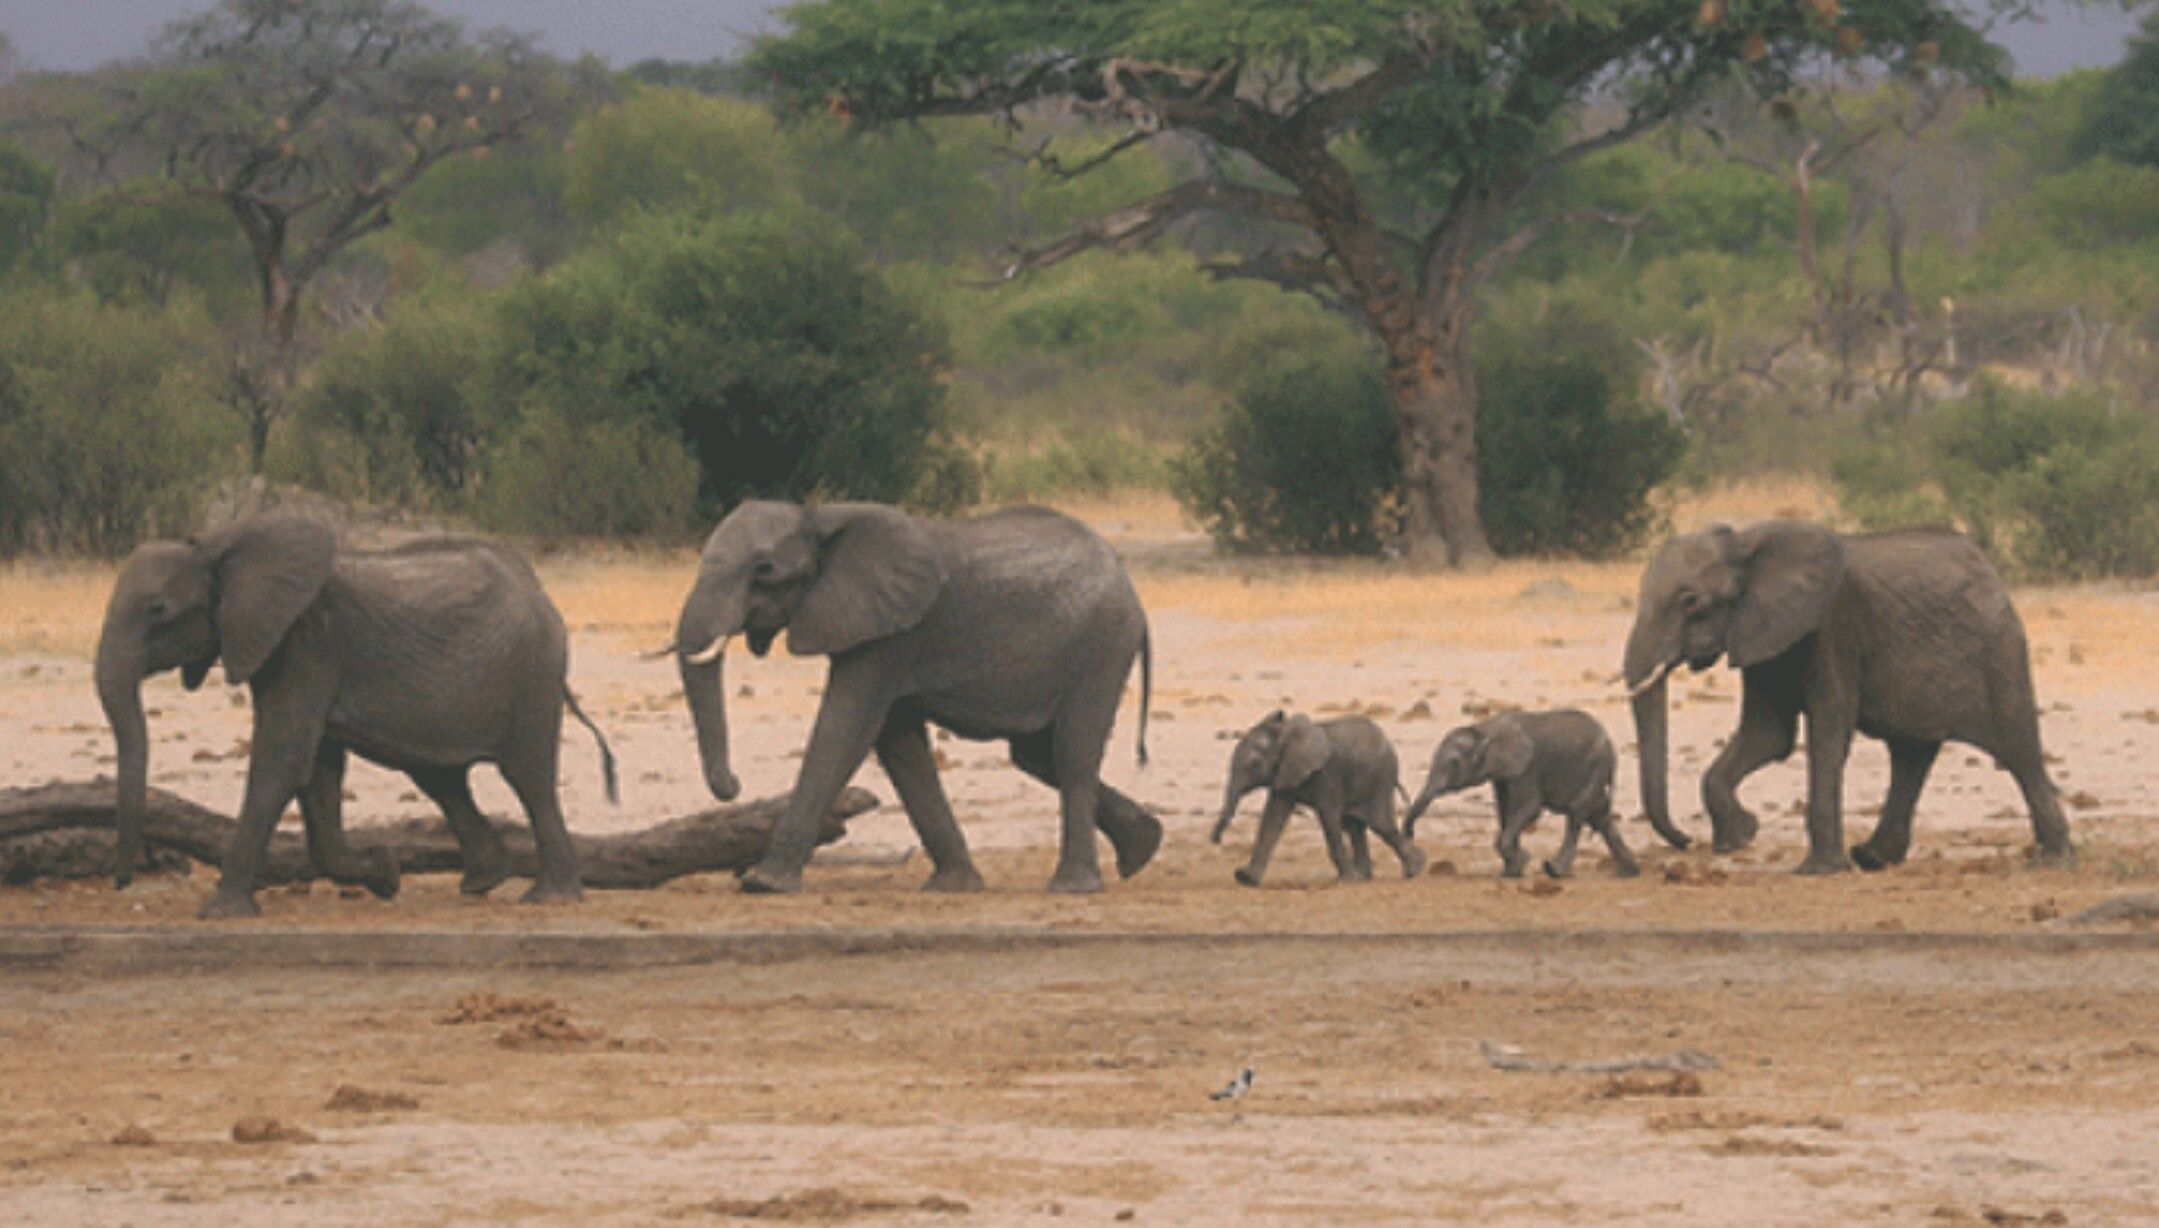 Hwange National Park: 100 elephants die due to drought in Zimbabwe’s Hwange National Park